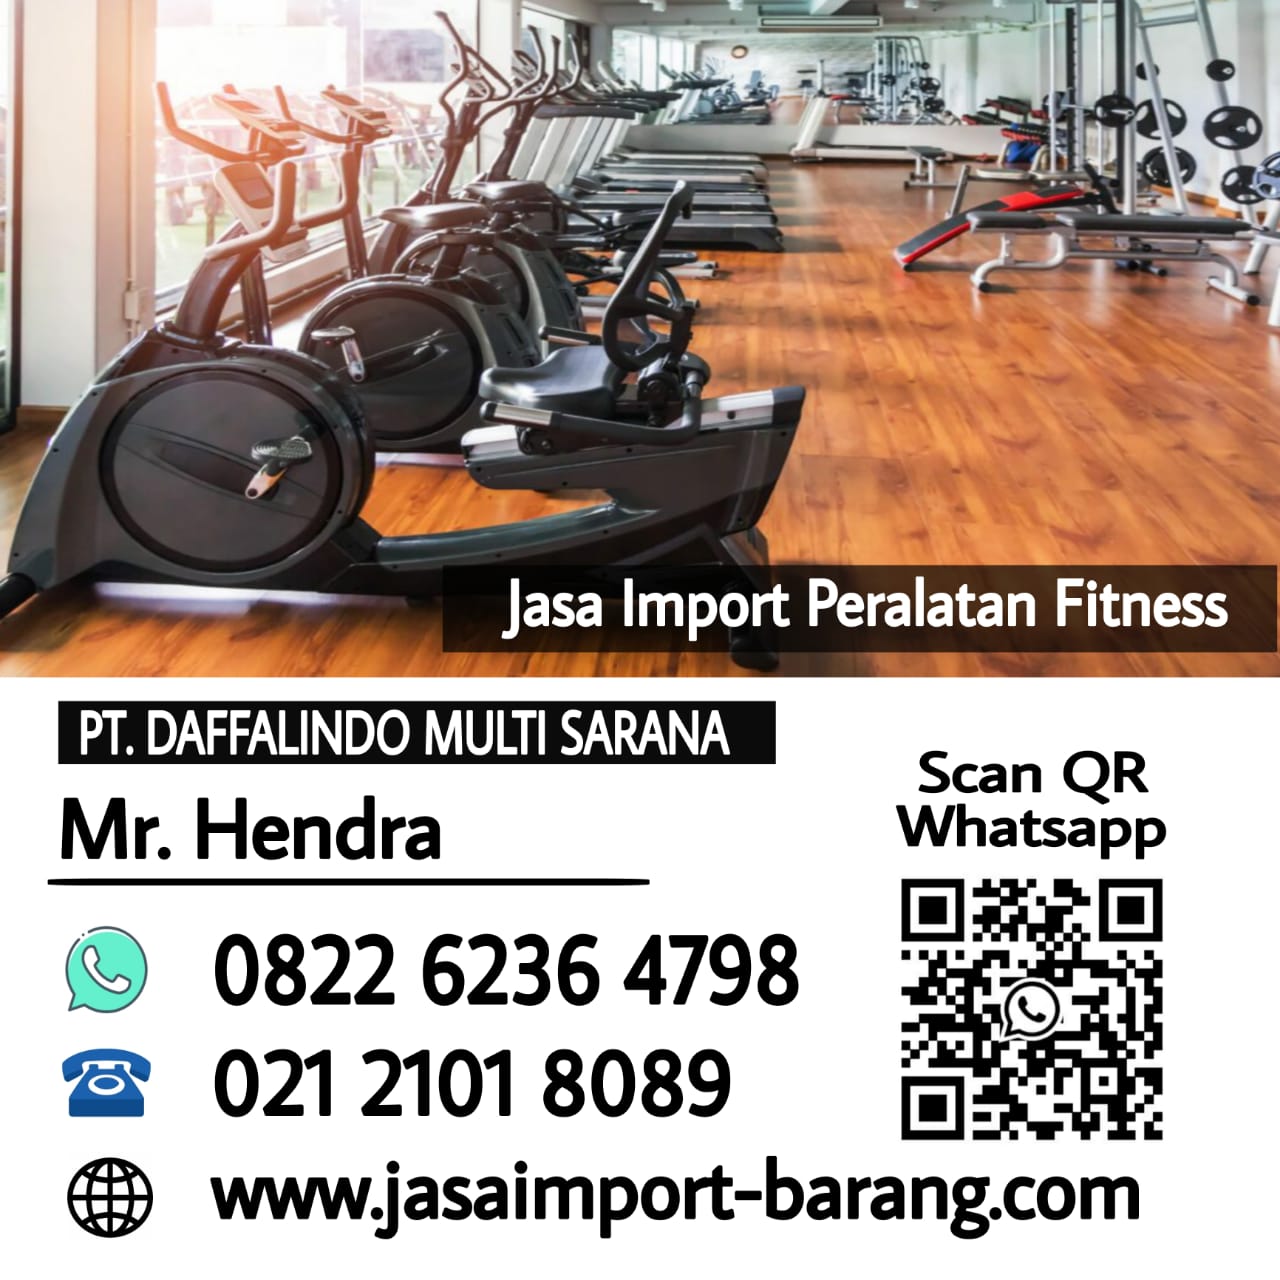 Jasa-Import-Peralatan-Fitness.jpg